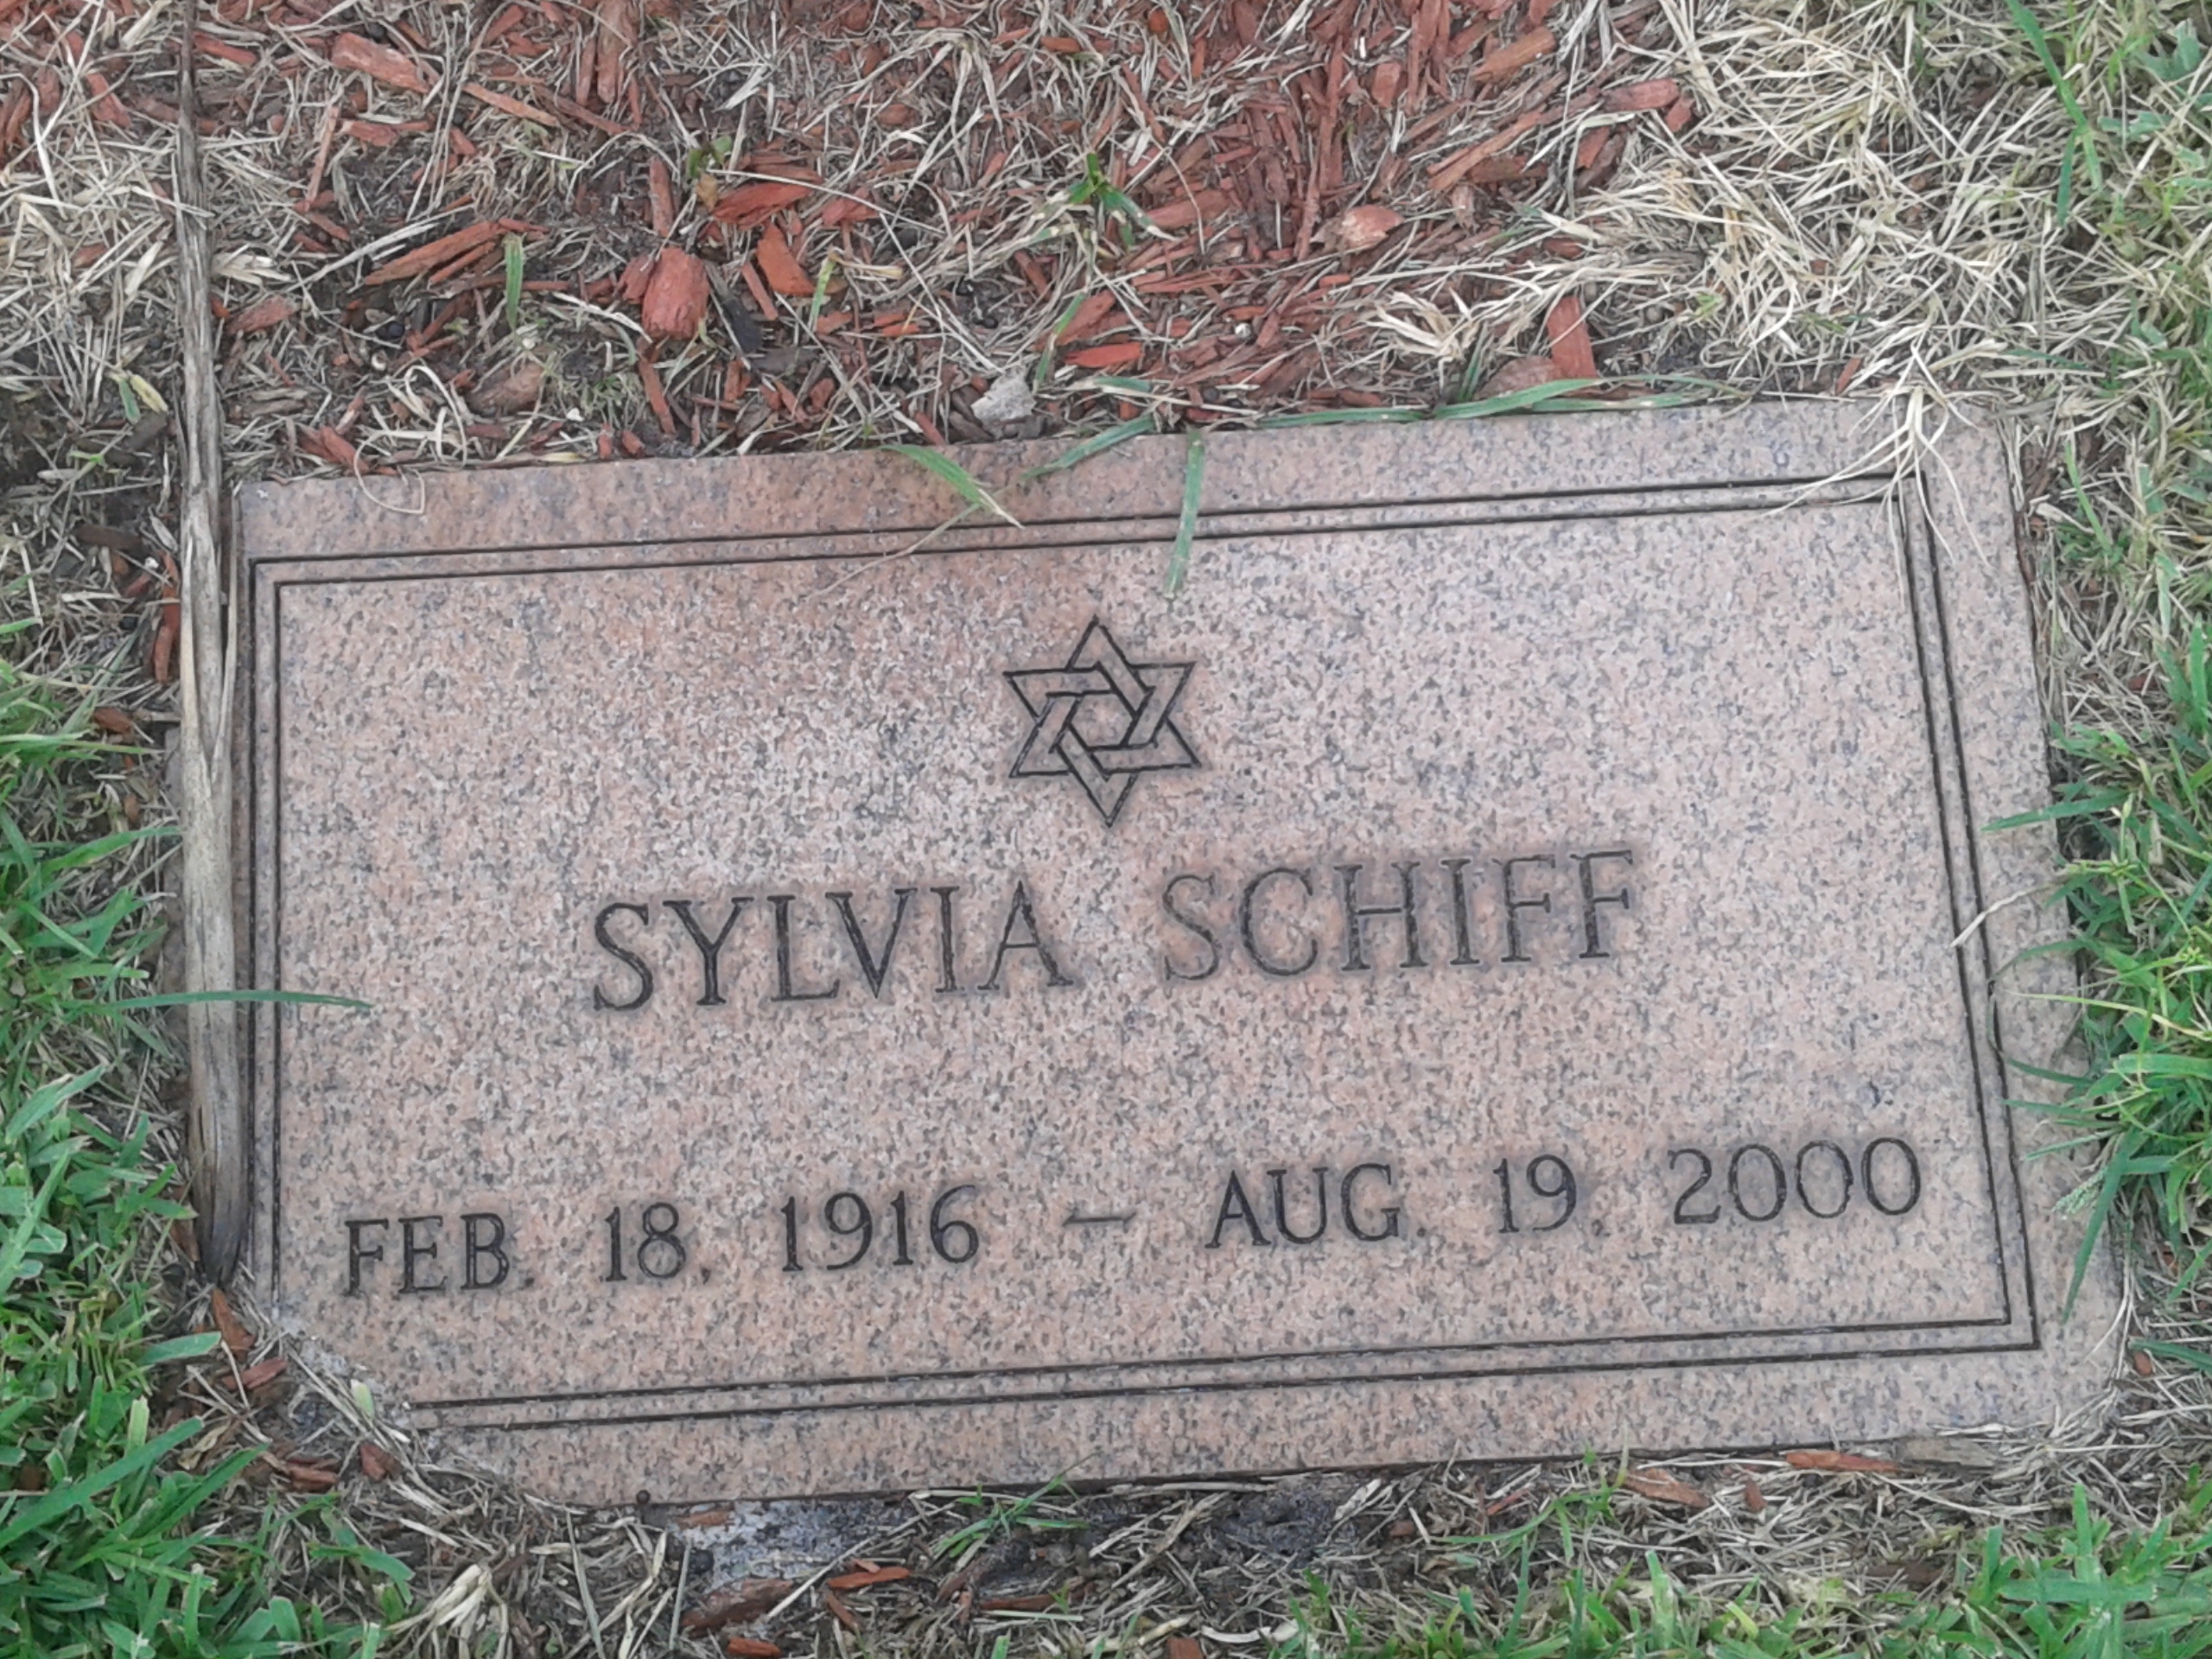 Sylvia Schiff